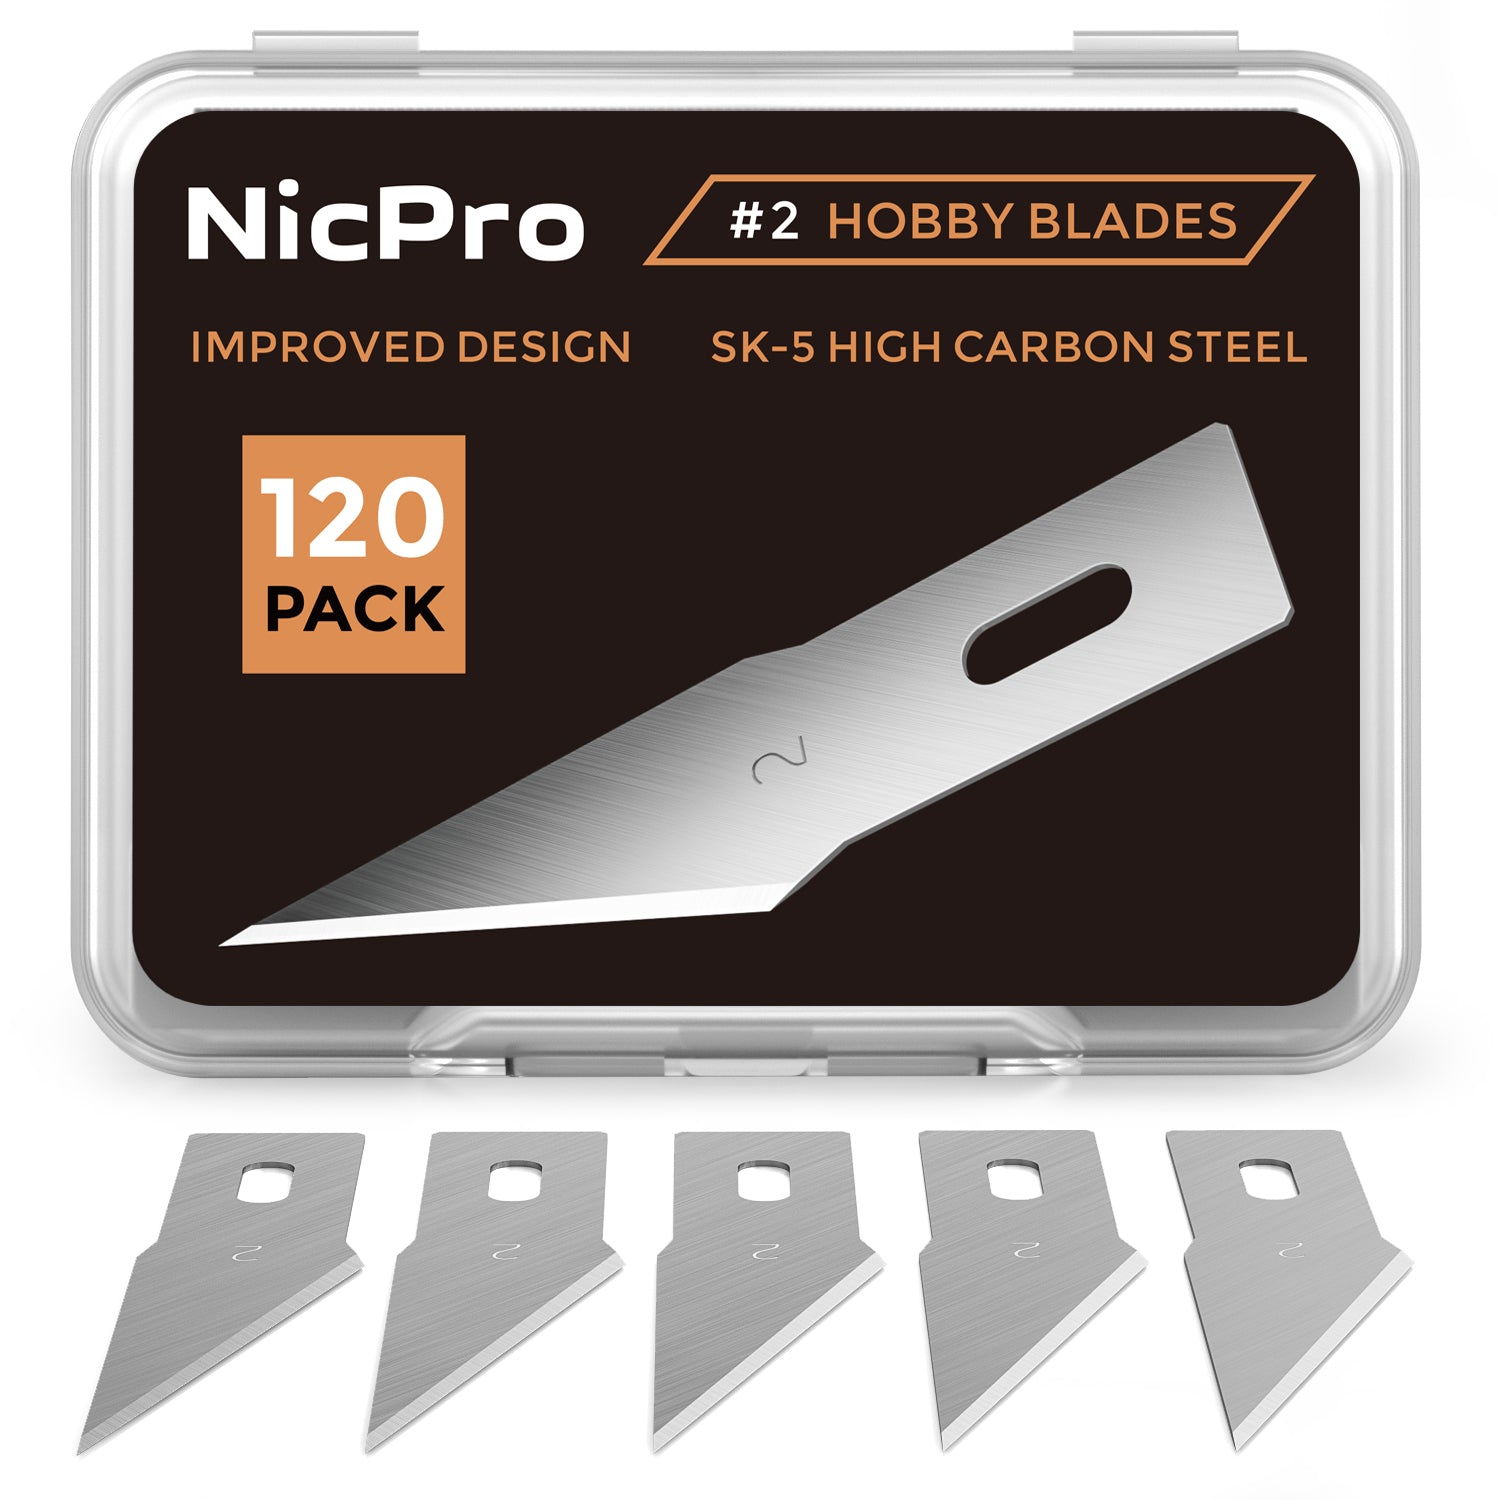 NEWISHTOOL Precision Hobby Knife Set Utility Exacto Knife Set with 10 PCS  Fine Point Razor Art Knife Tool for Architecture Modeling, Pumpkin Cutting